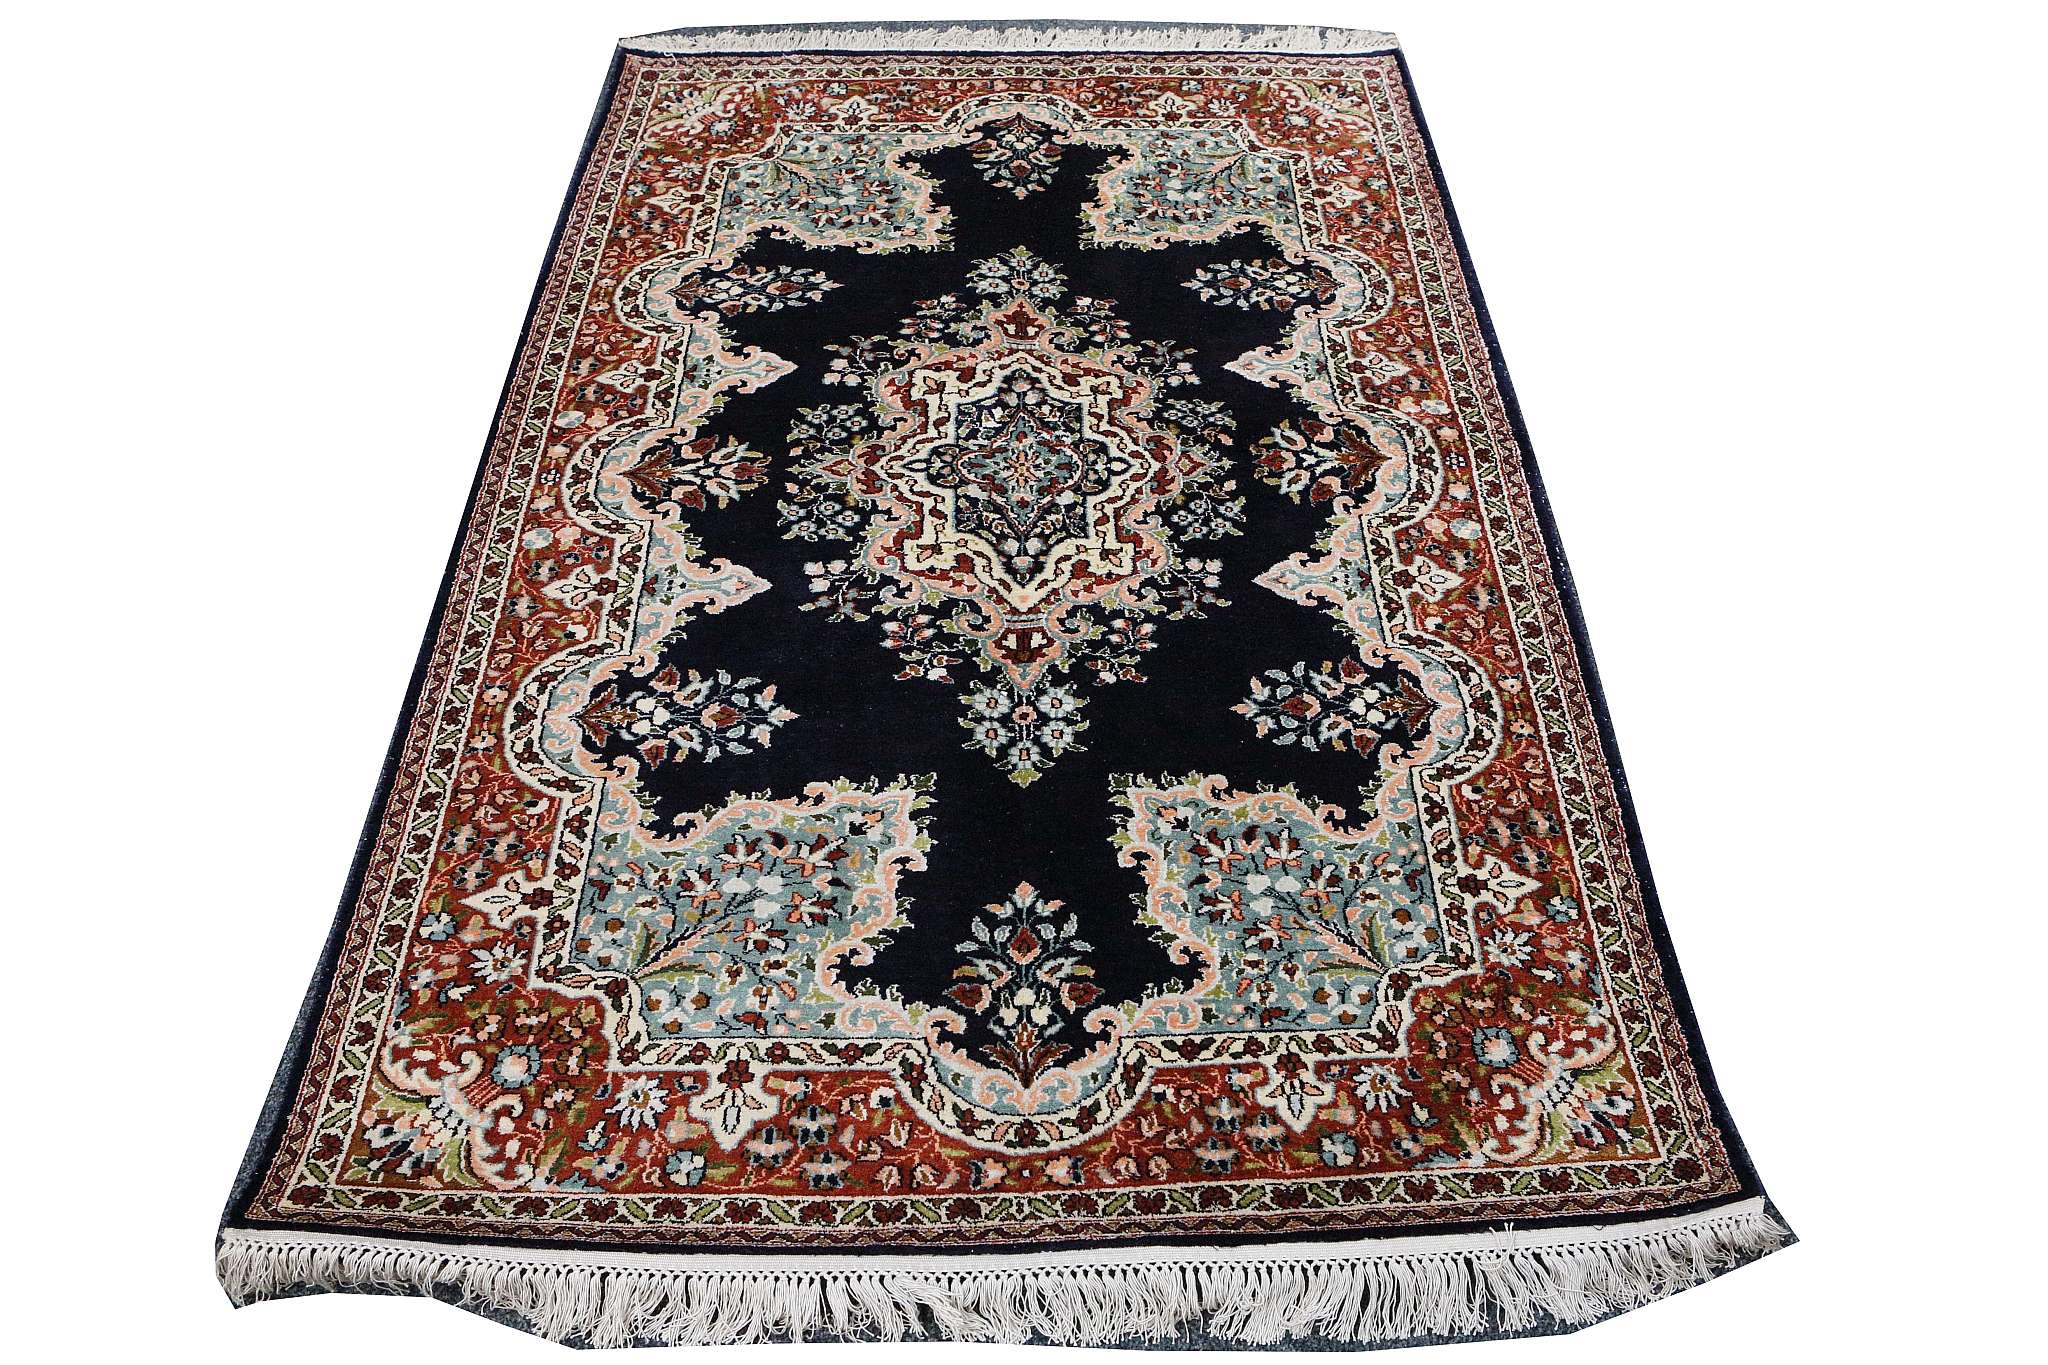 Indian Kashmir silk rug, 1.86m x 1.18m, condition